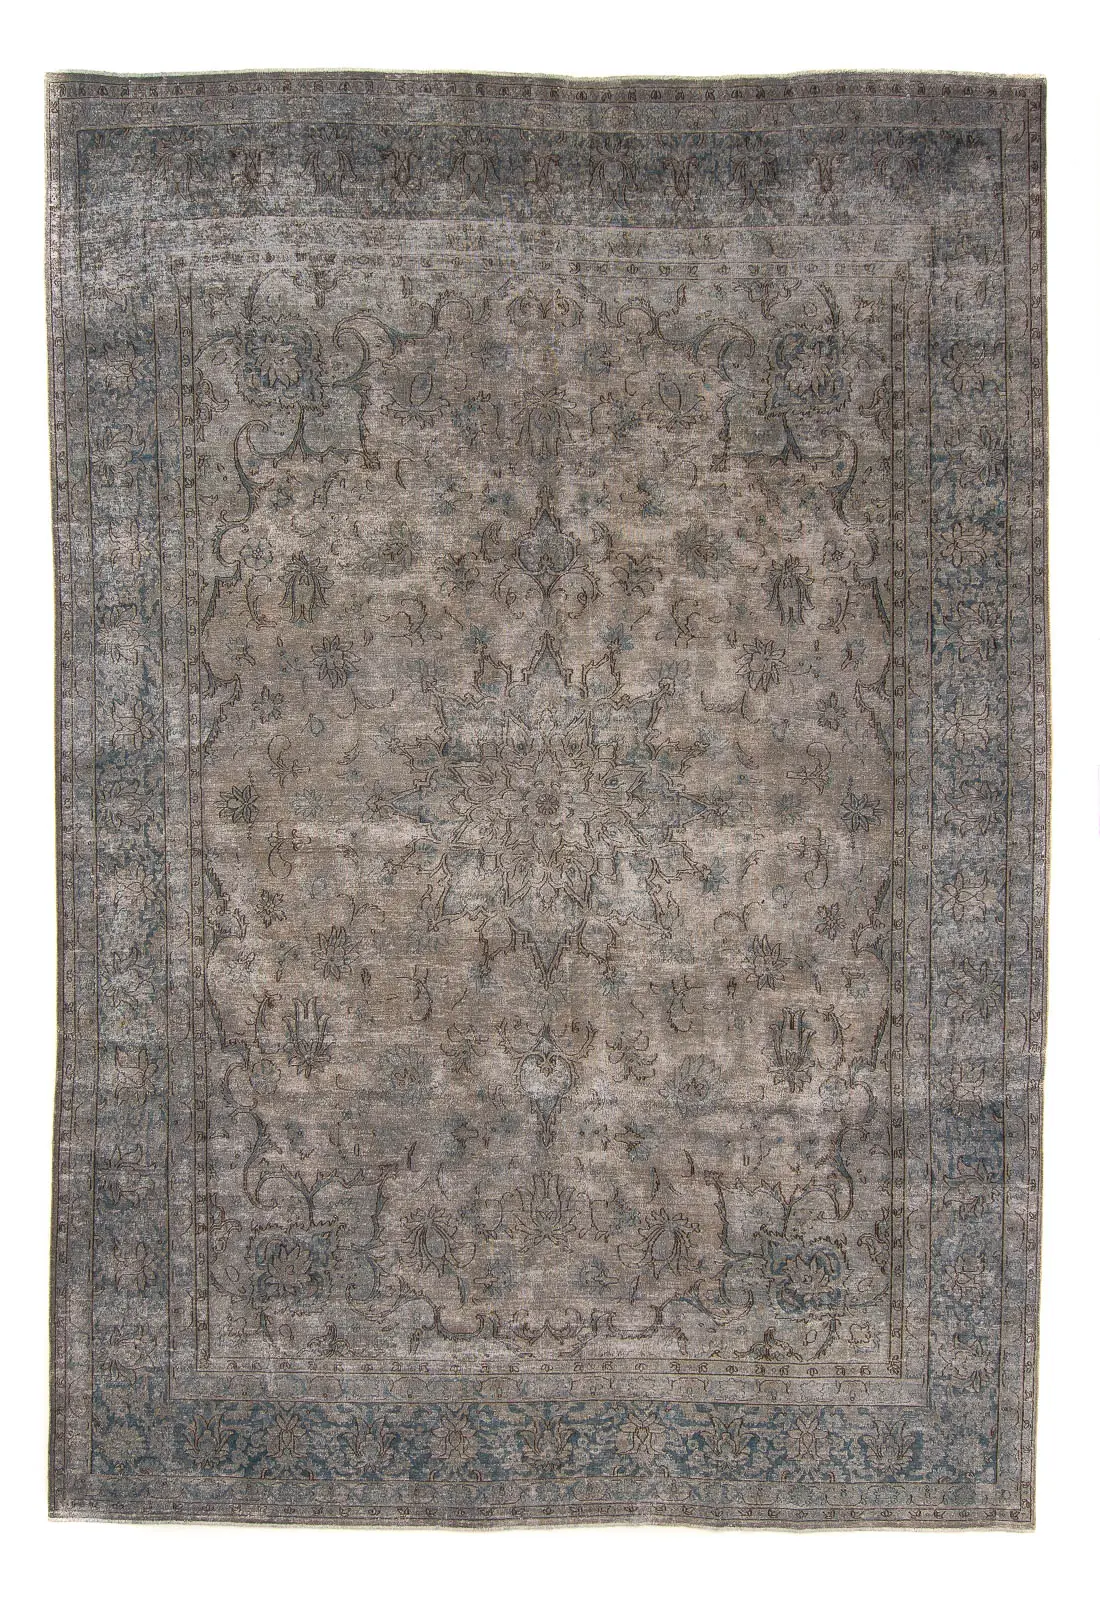 Vintage Teppich - x - grau 290 389 cm